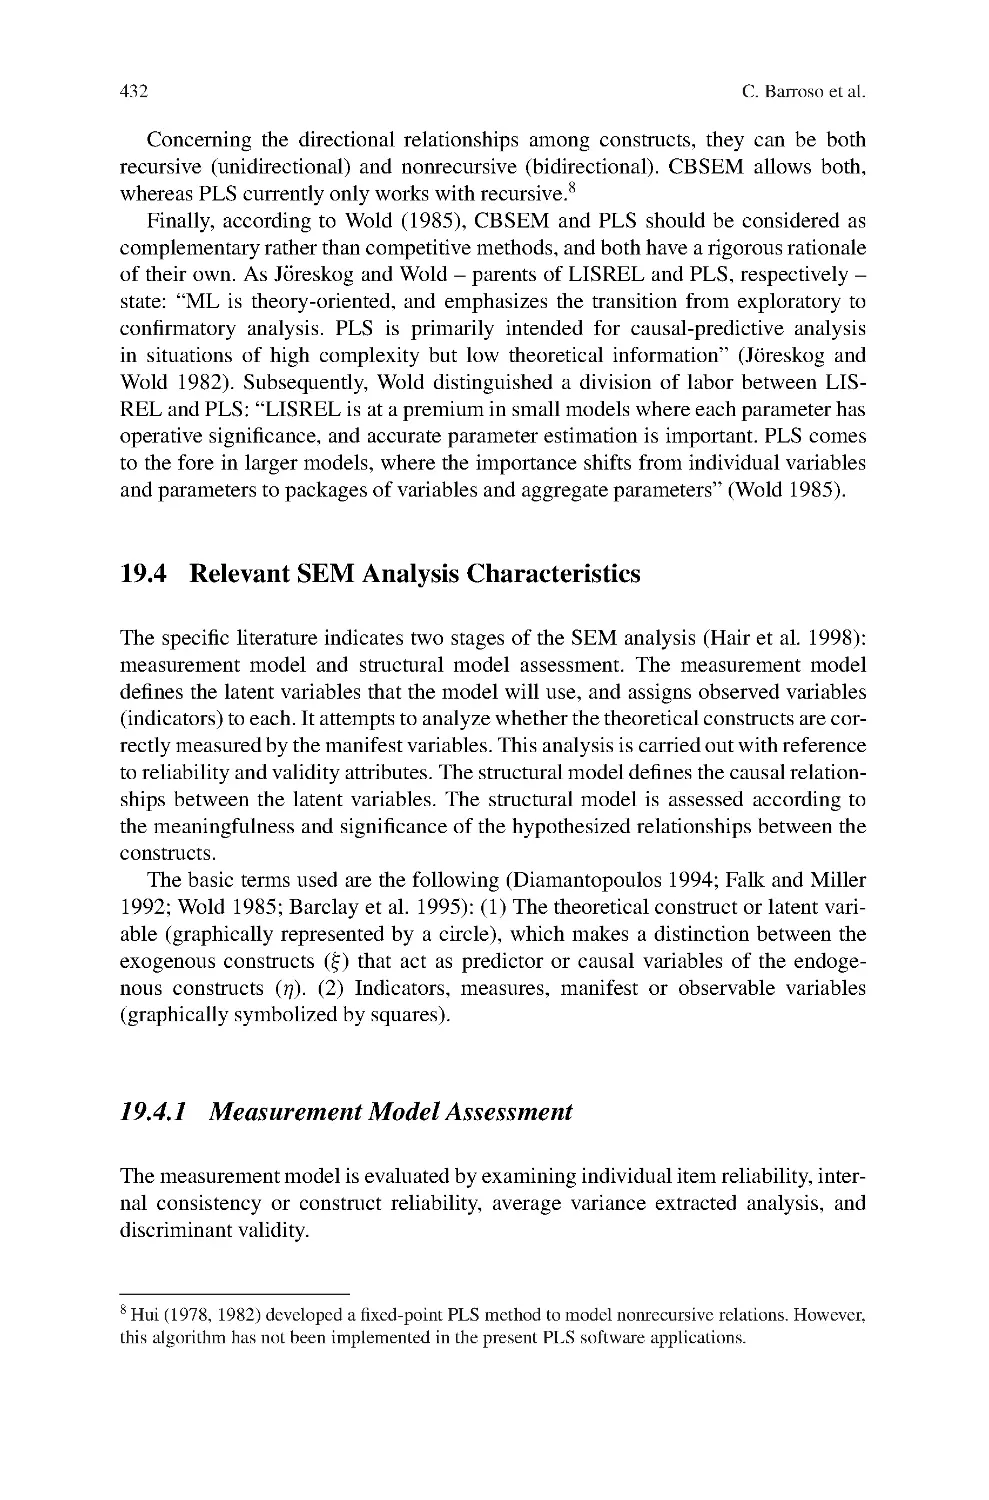 19.4 Relevant SEM Analysis Characteristics